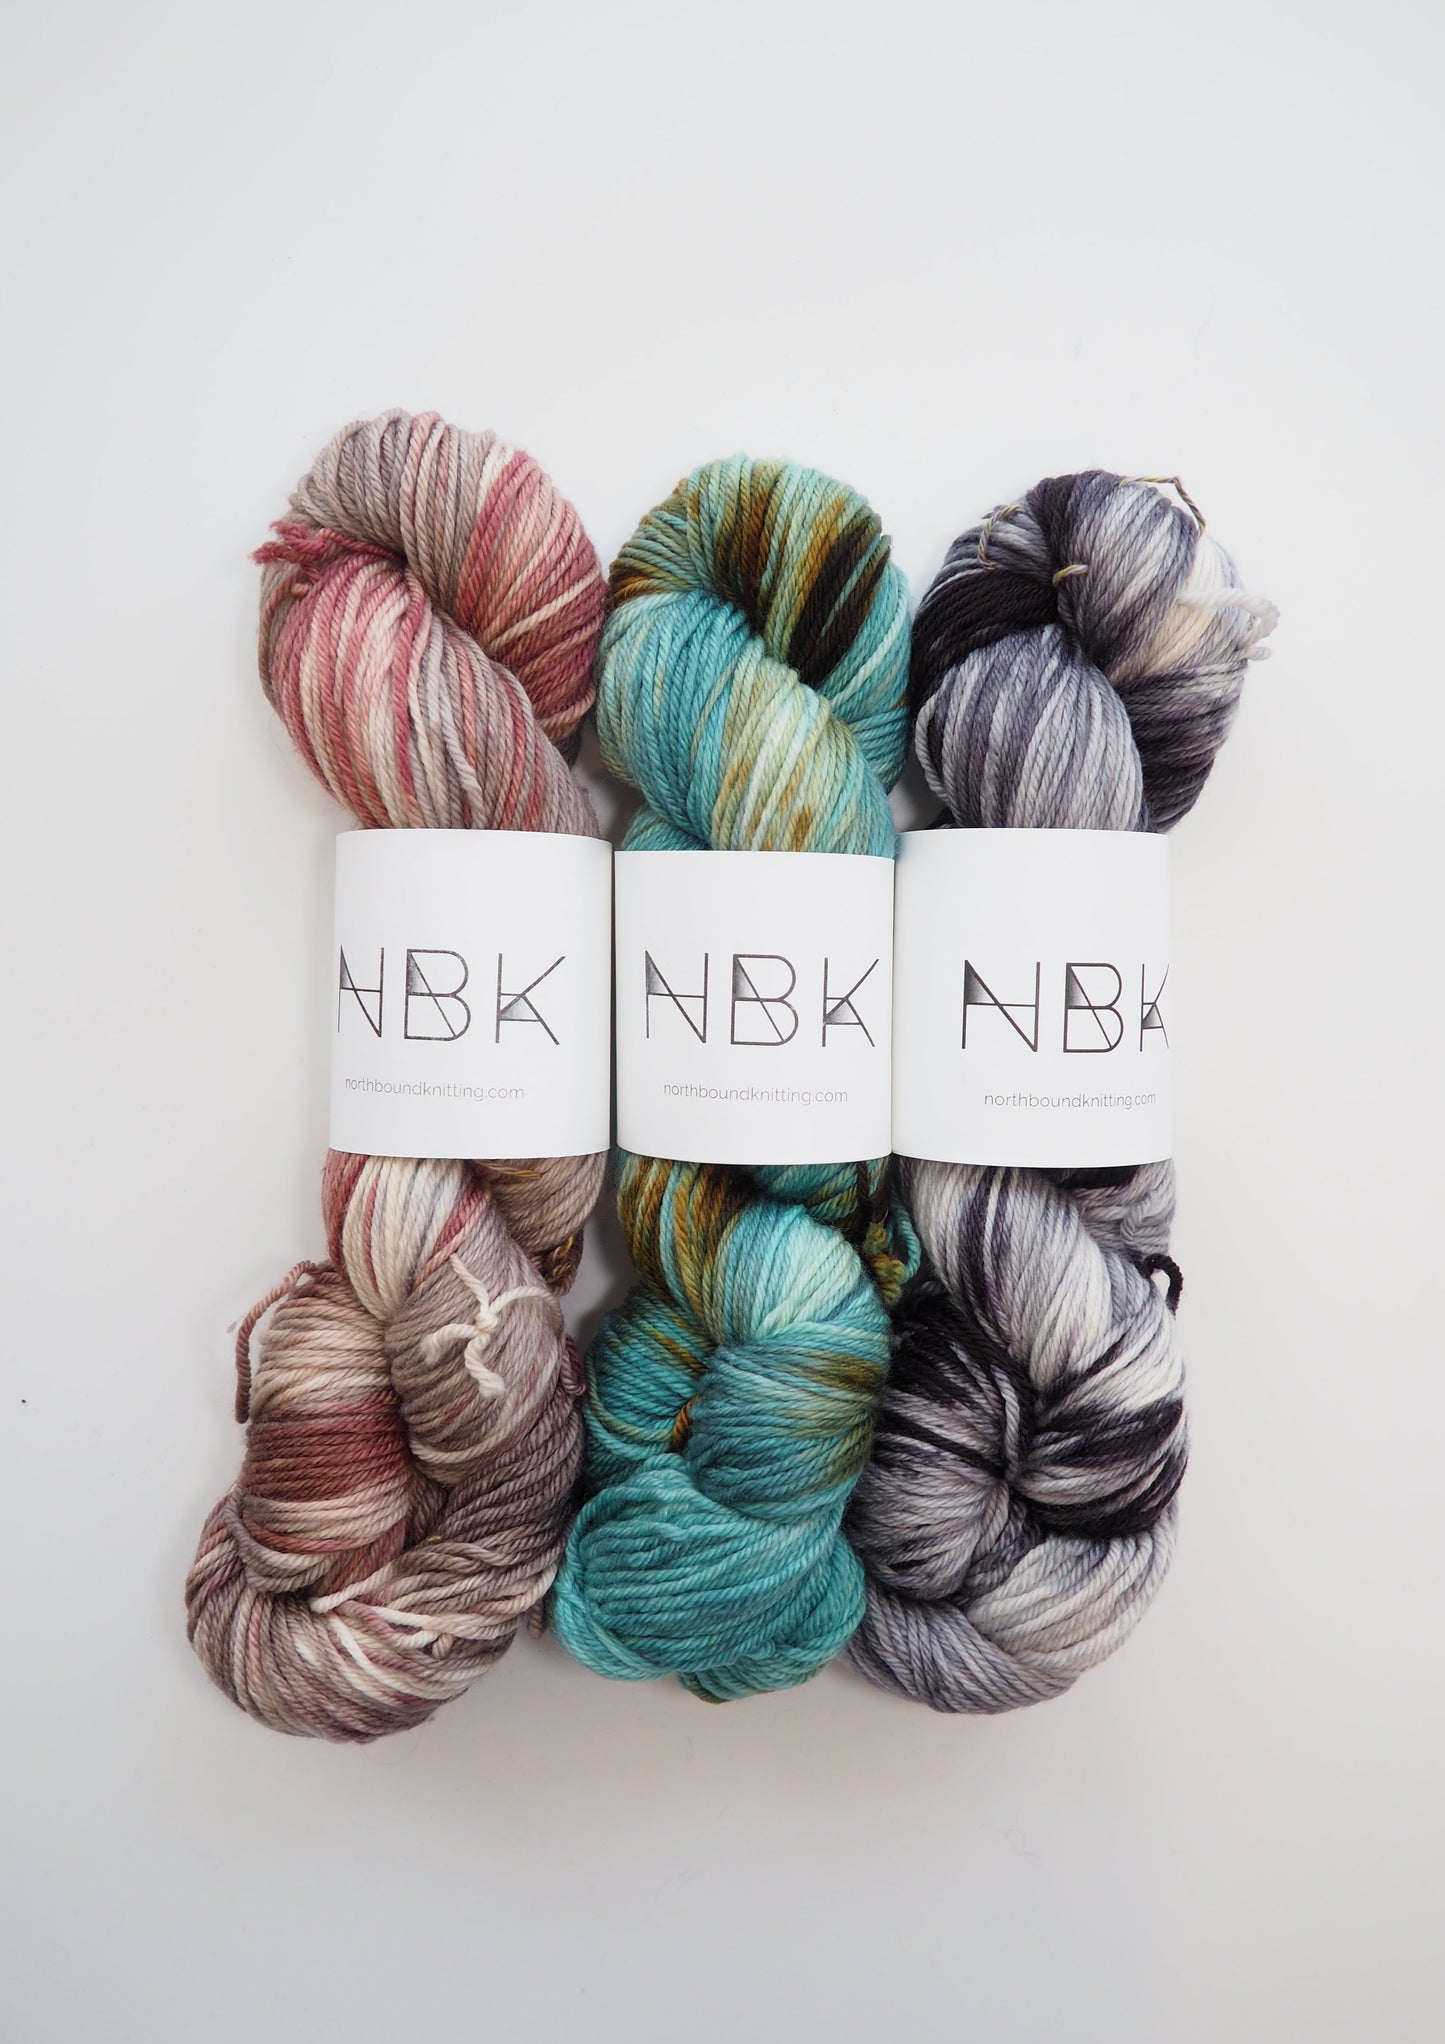 Three skeins of hand-dyed Northbound Knitting Superwash Merino DK yarn in various colors